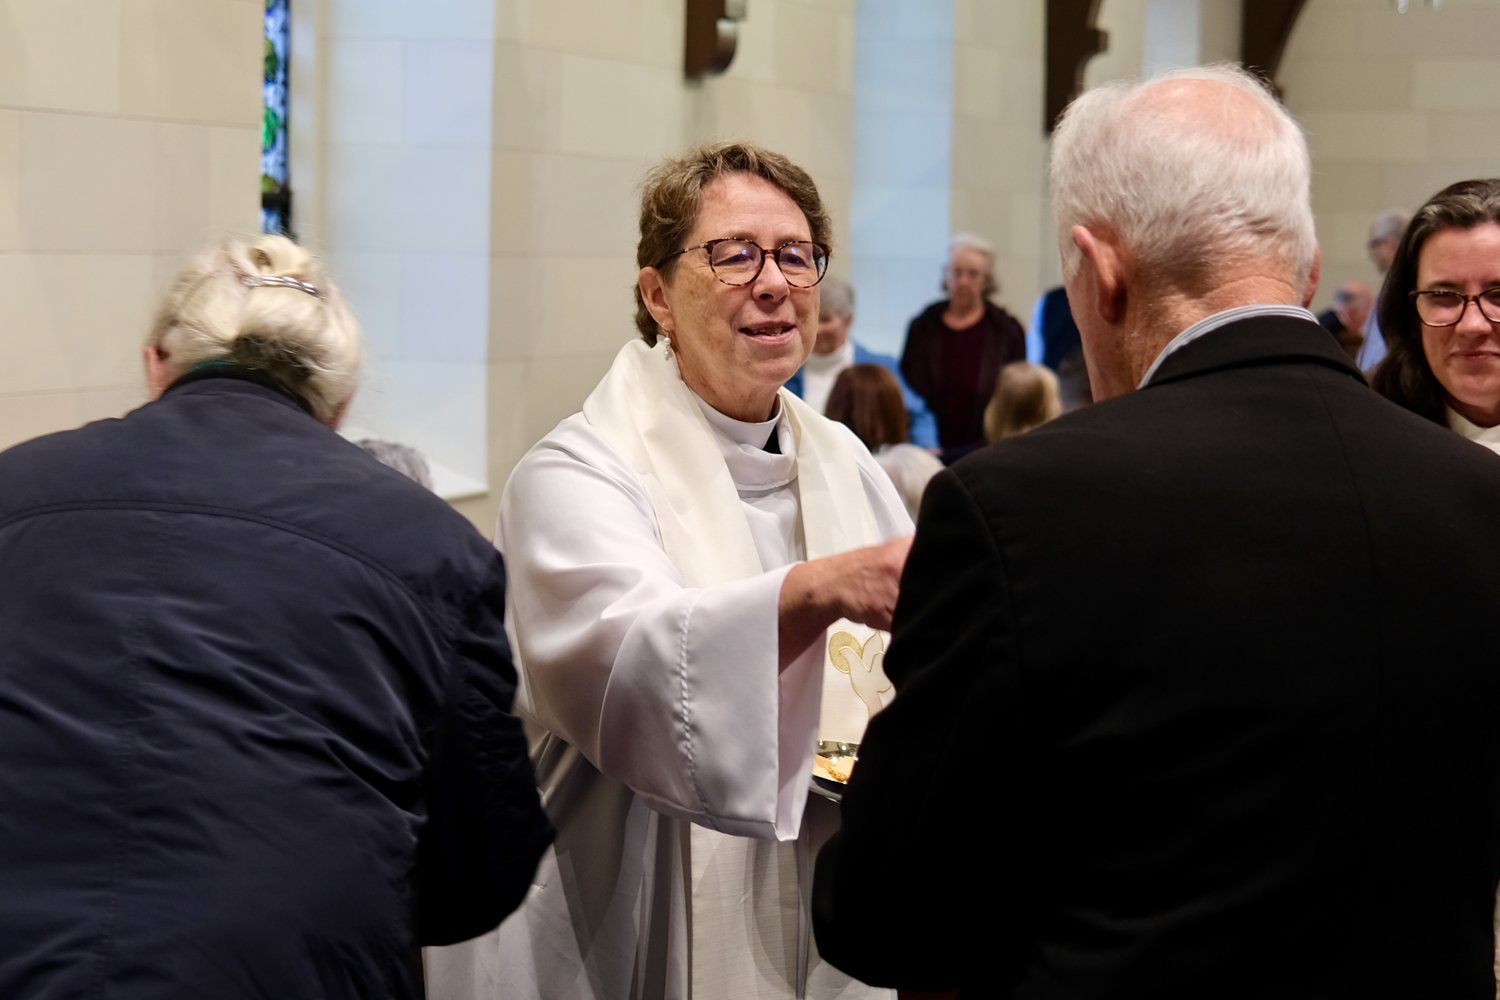 The Rev. Pamela Mott gives communion to a parishioner.